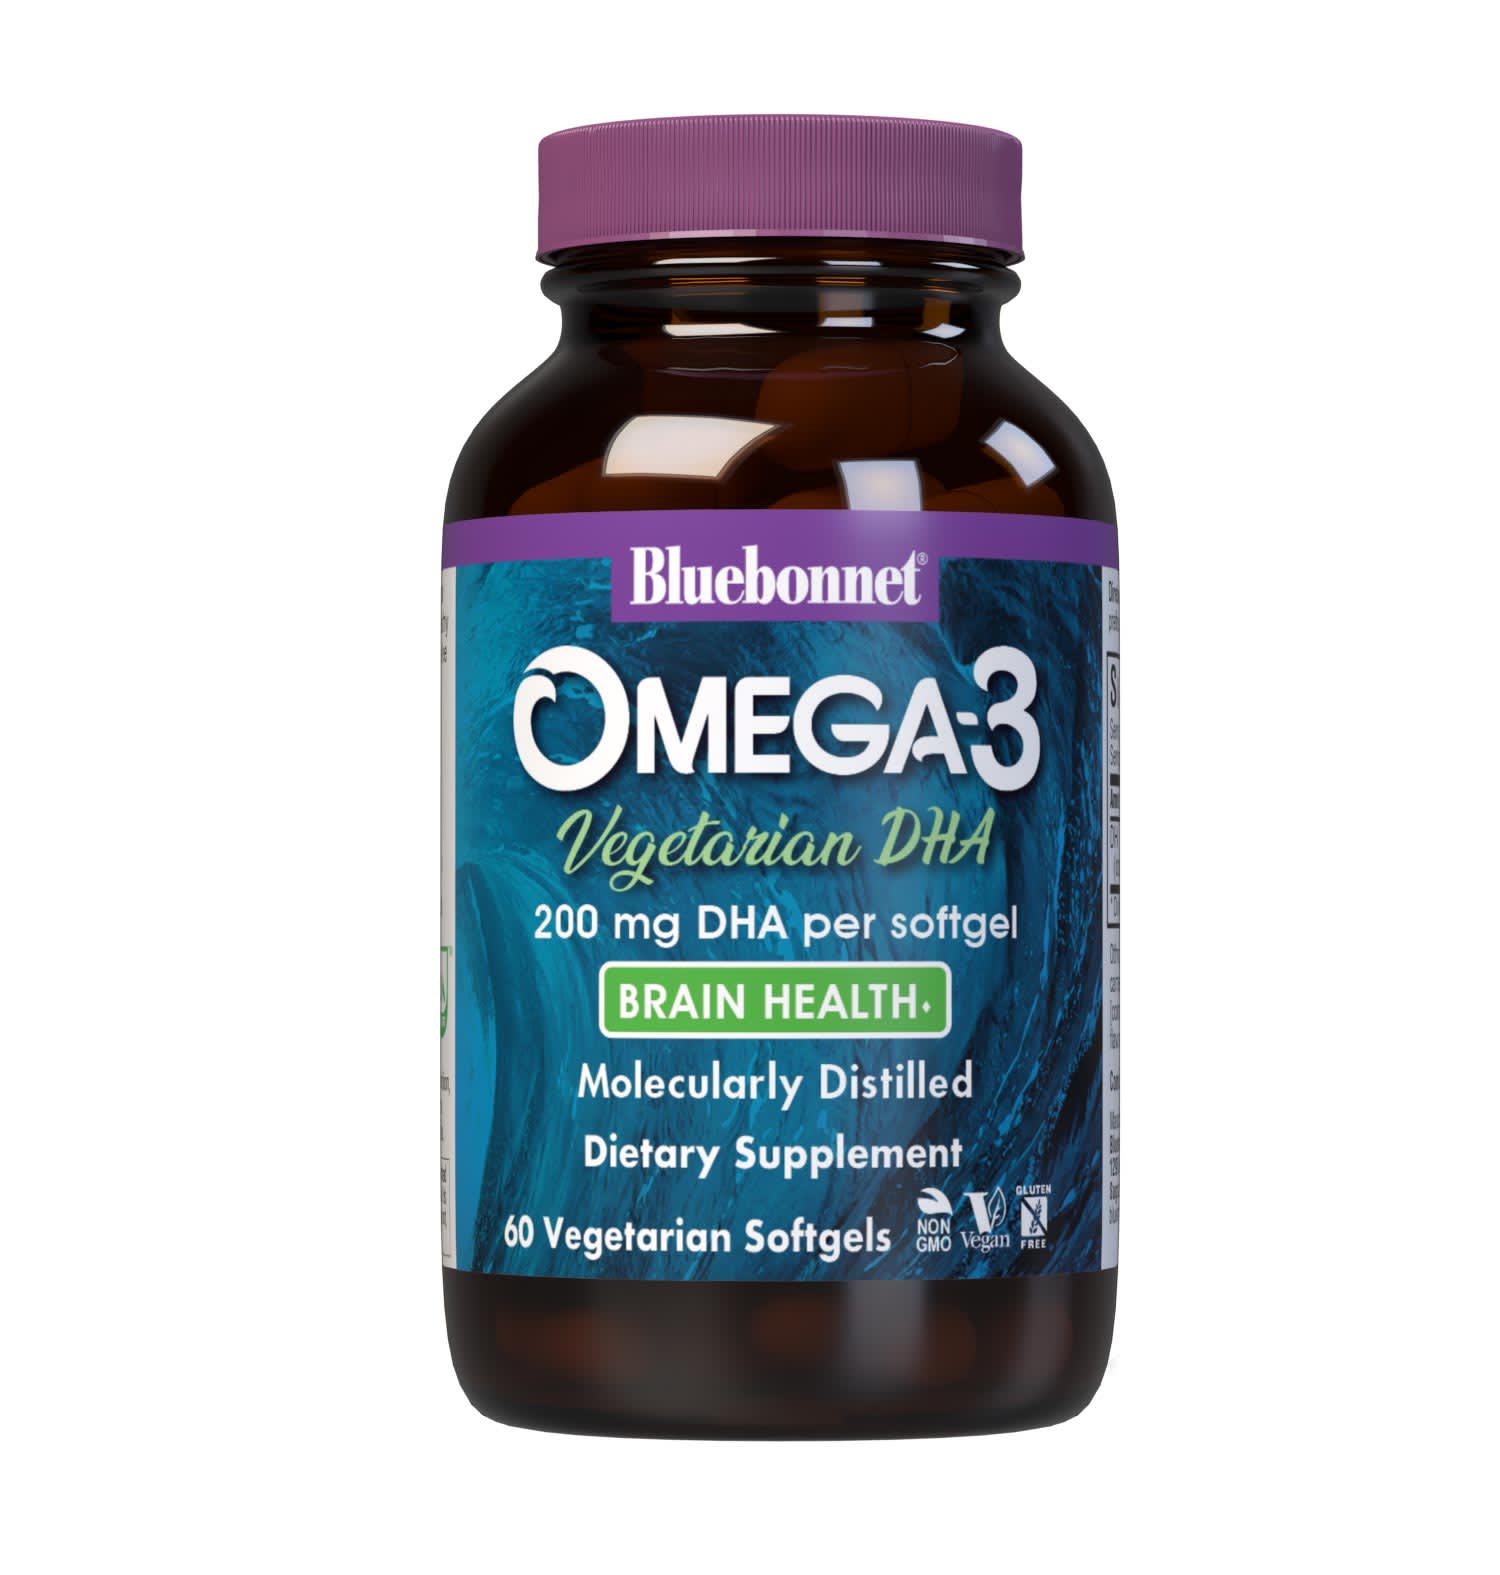 Omega-3 Vegetarian DHA 200 mg Vegetarian Softgels - Heart Health - Solgar